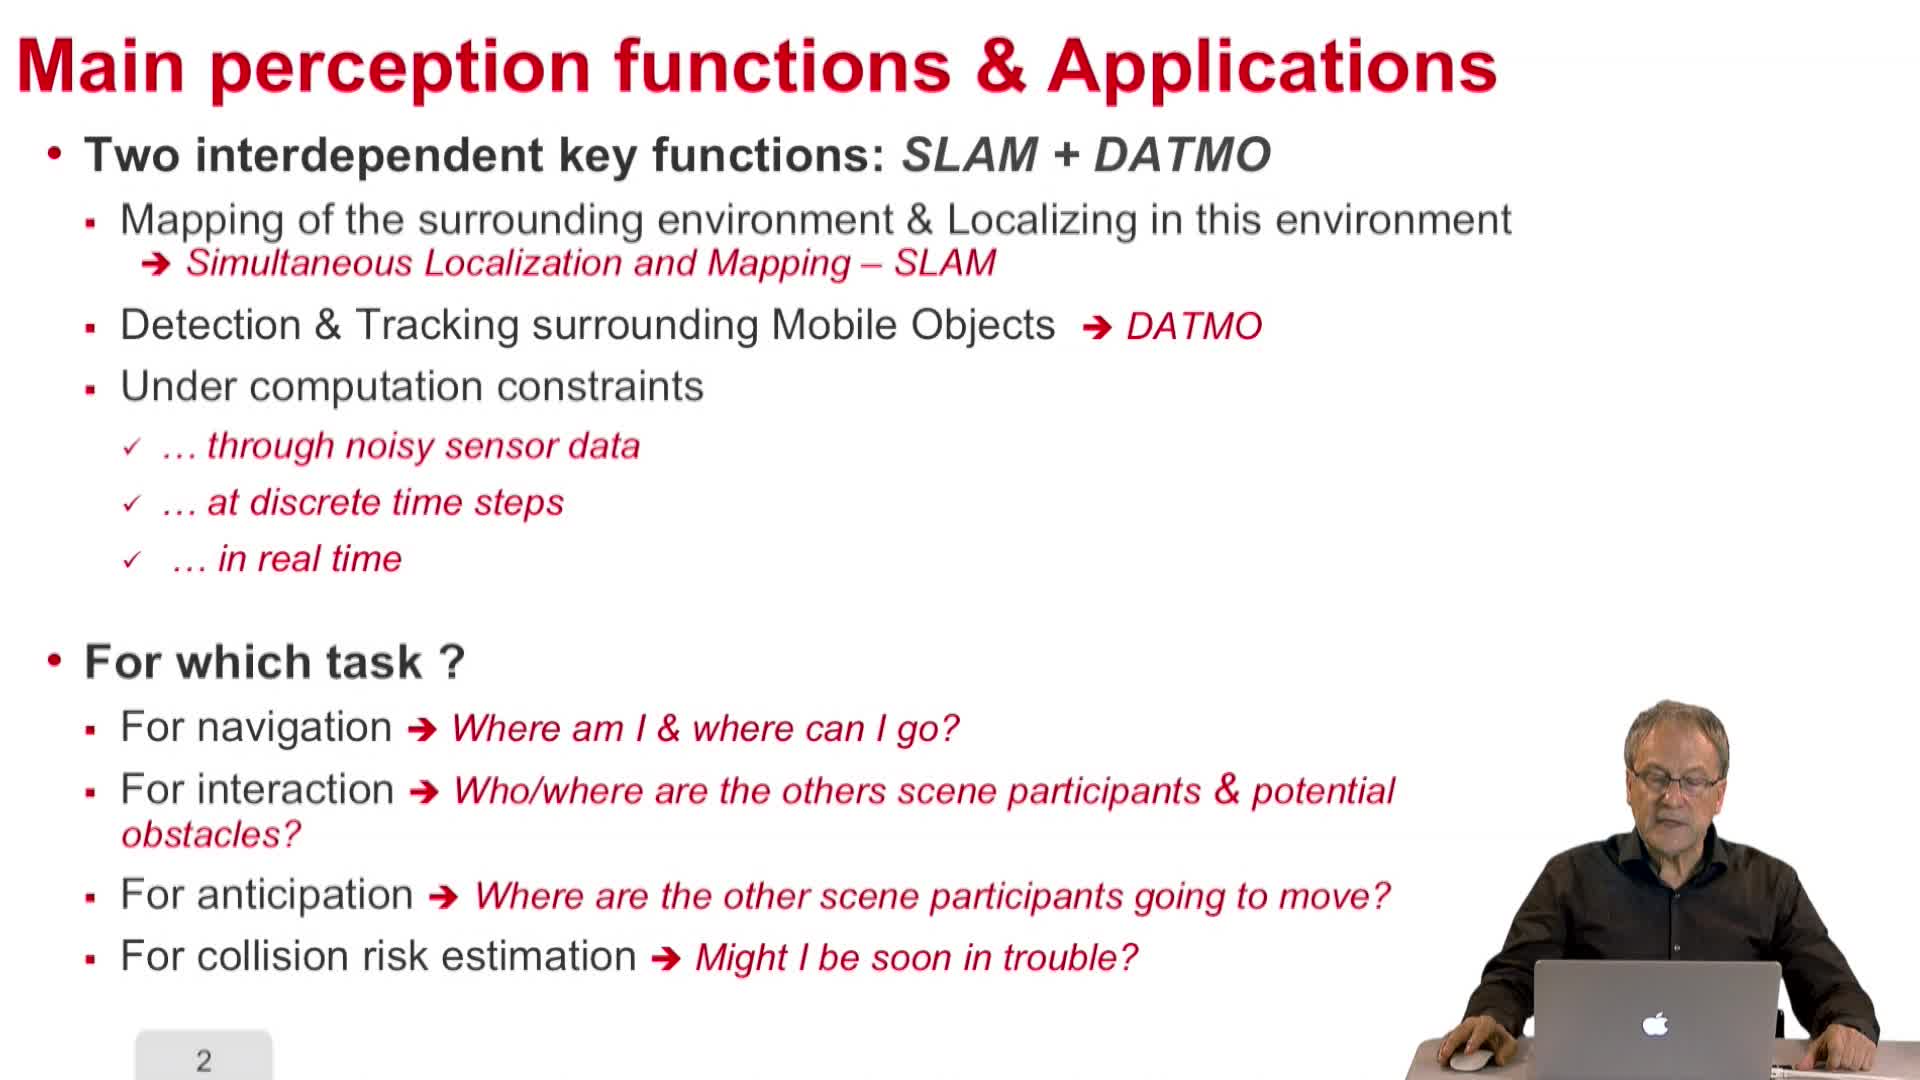 4.4. Object level Perception functions (SLAM + DATMO)